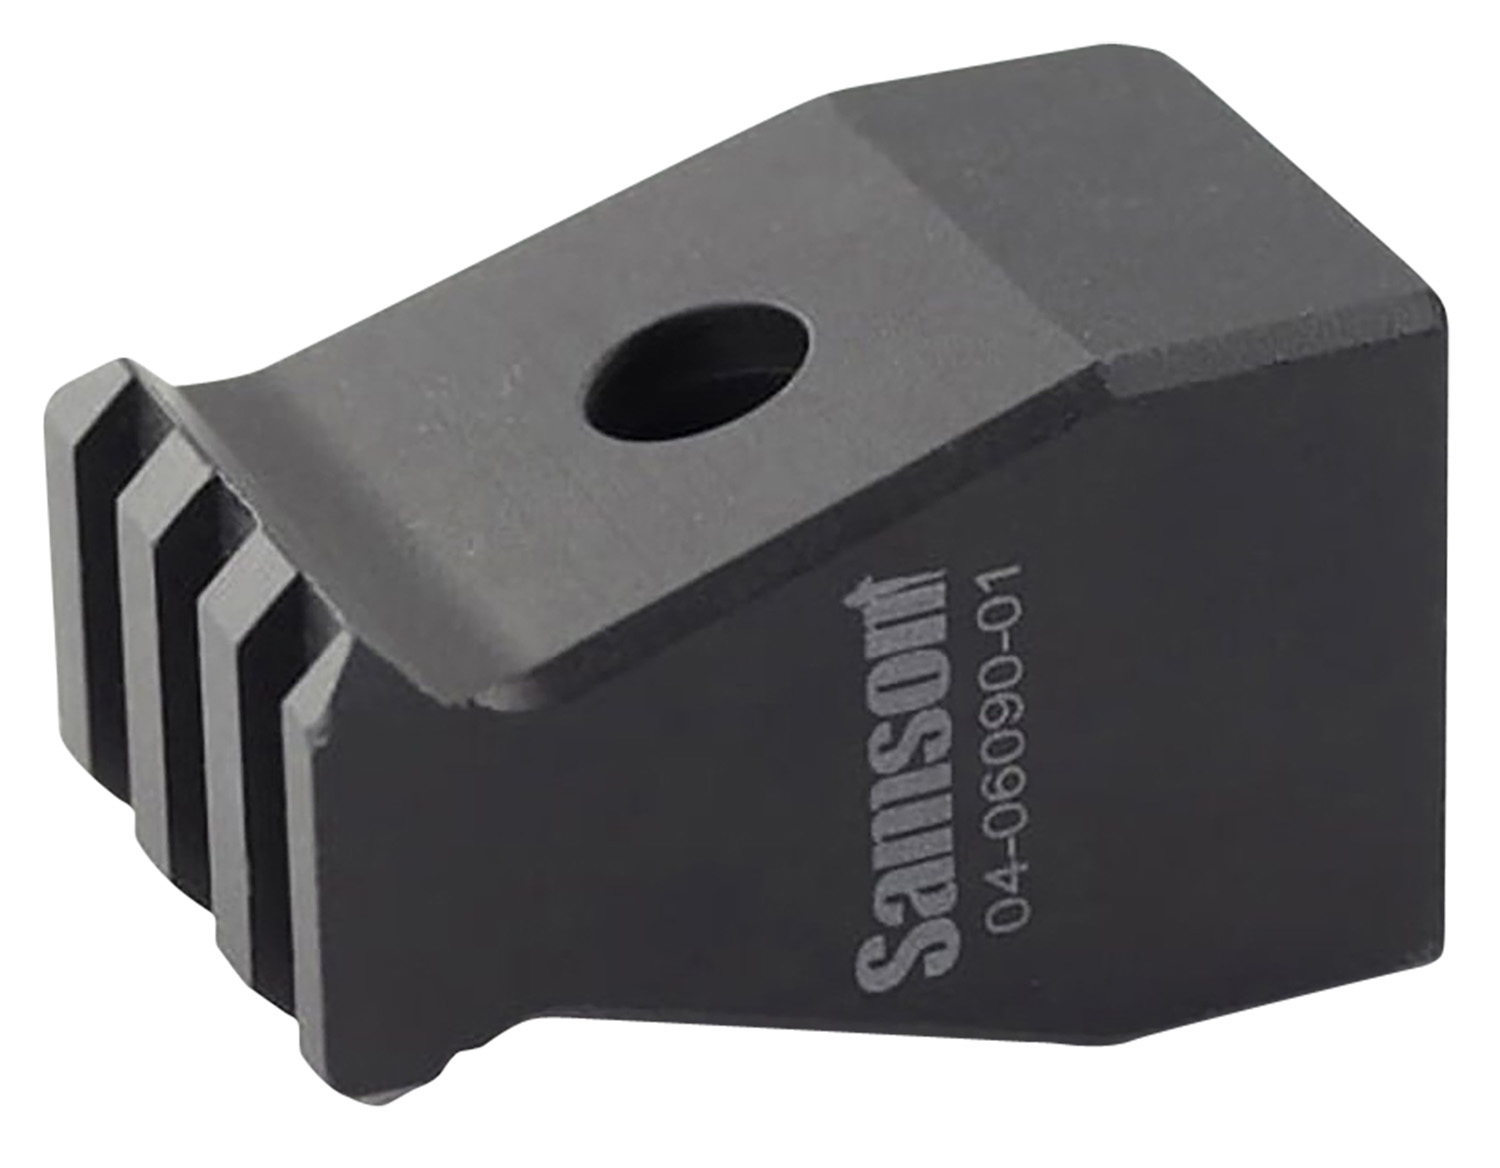 Samson 040609001 Rear Trunnion Stock Adapter Picatinny Rail, Black Anodized Aluminum, Fits Most AK-Platform